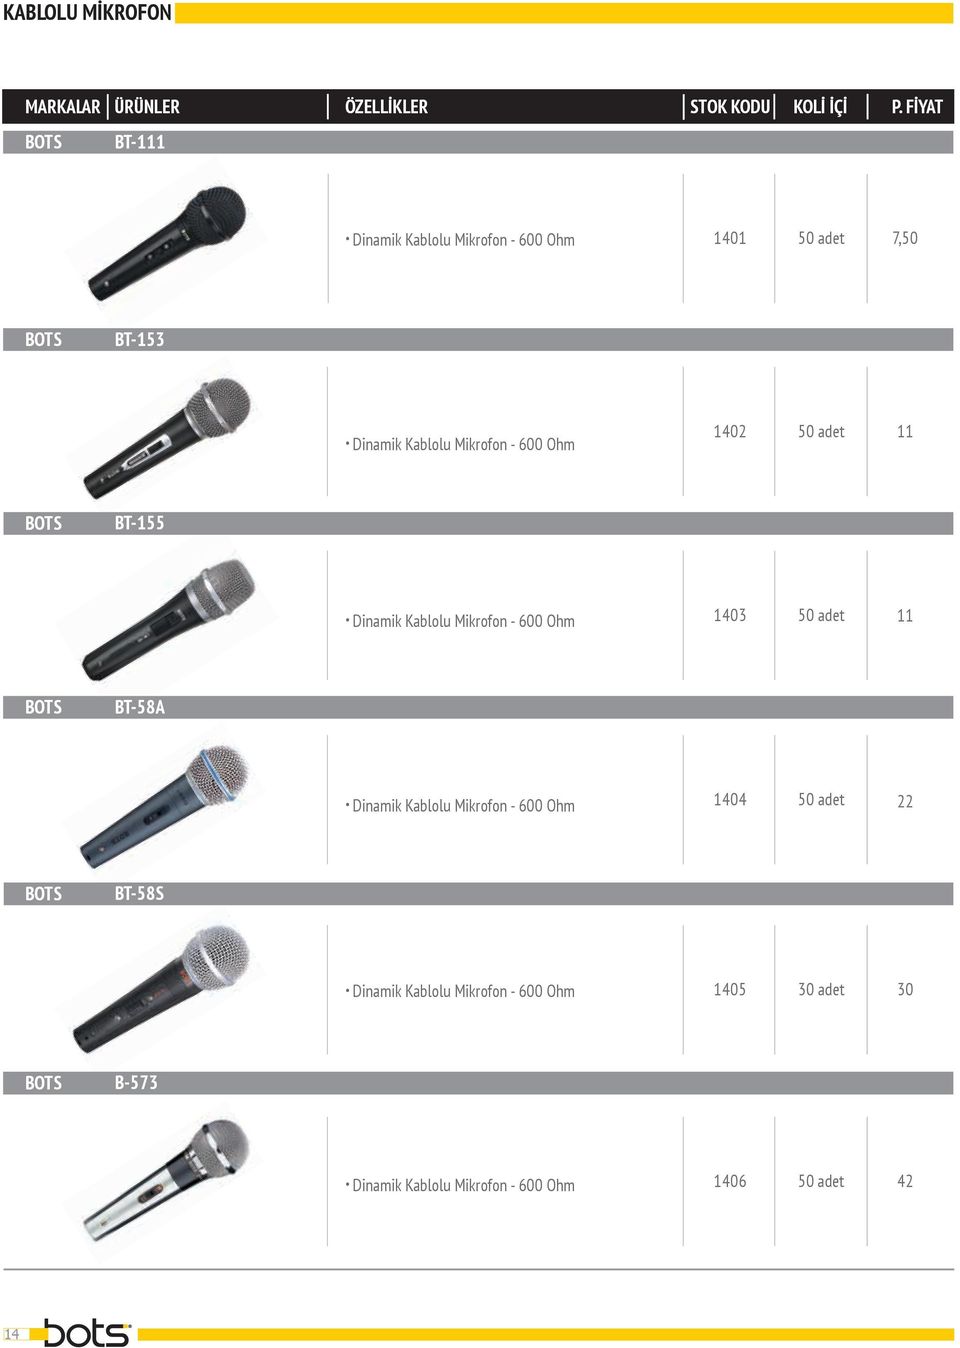 Dinamik Kablolu Mikrofon - 600 Ohm 1402 50 adet 11 BT-155.